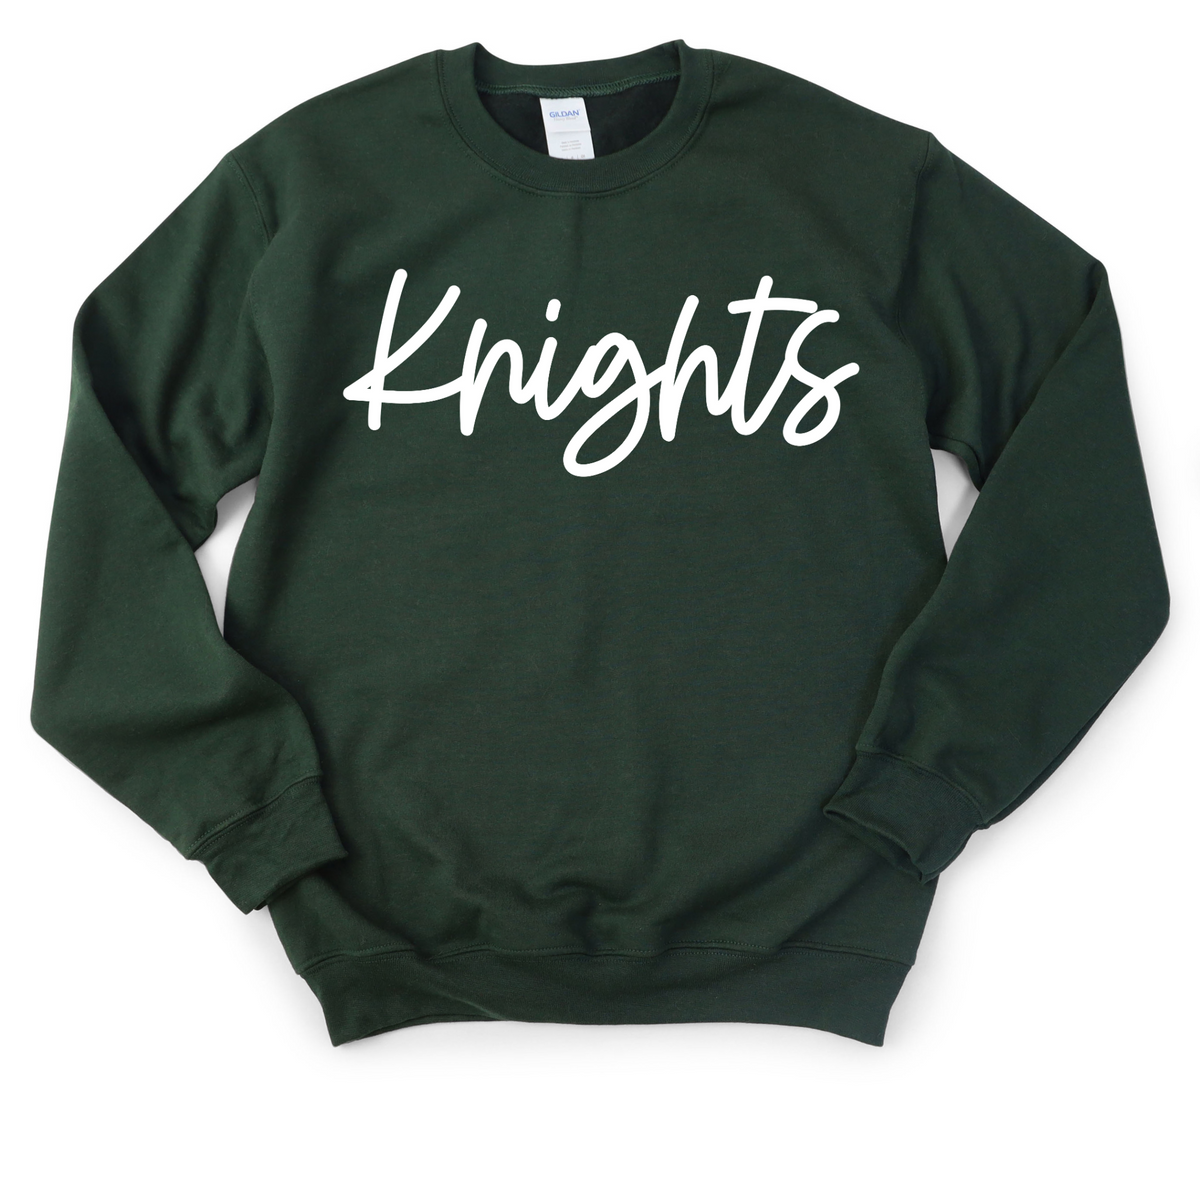 Knights Crewneck Sweatshirt